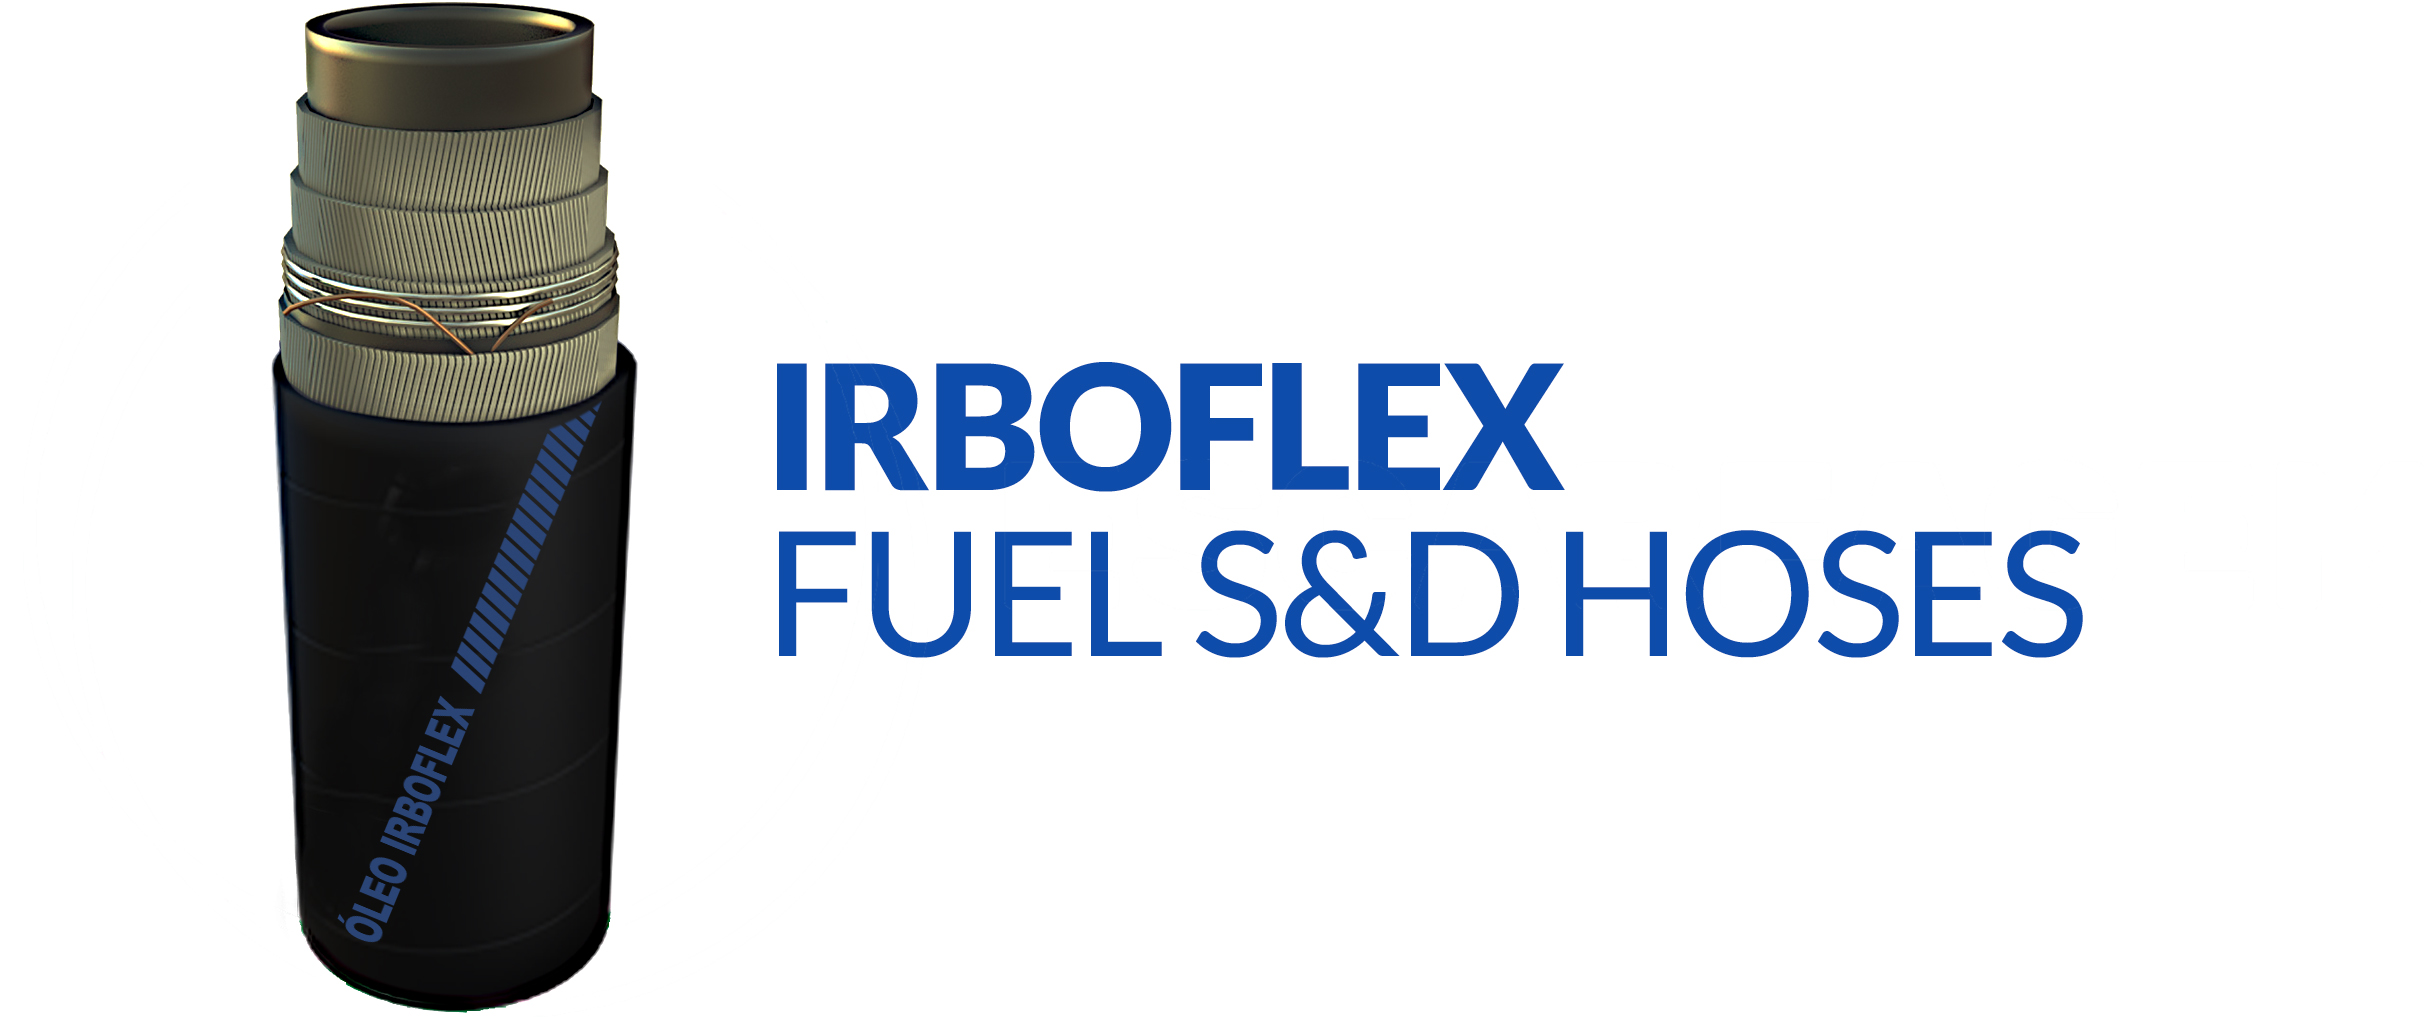 succao-e-descarga-de-oleos-e-derivados-_-_irboflex-fuel-sd-hoses-copia